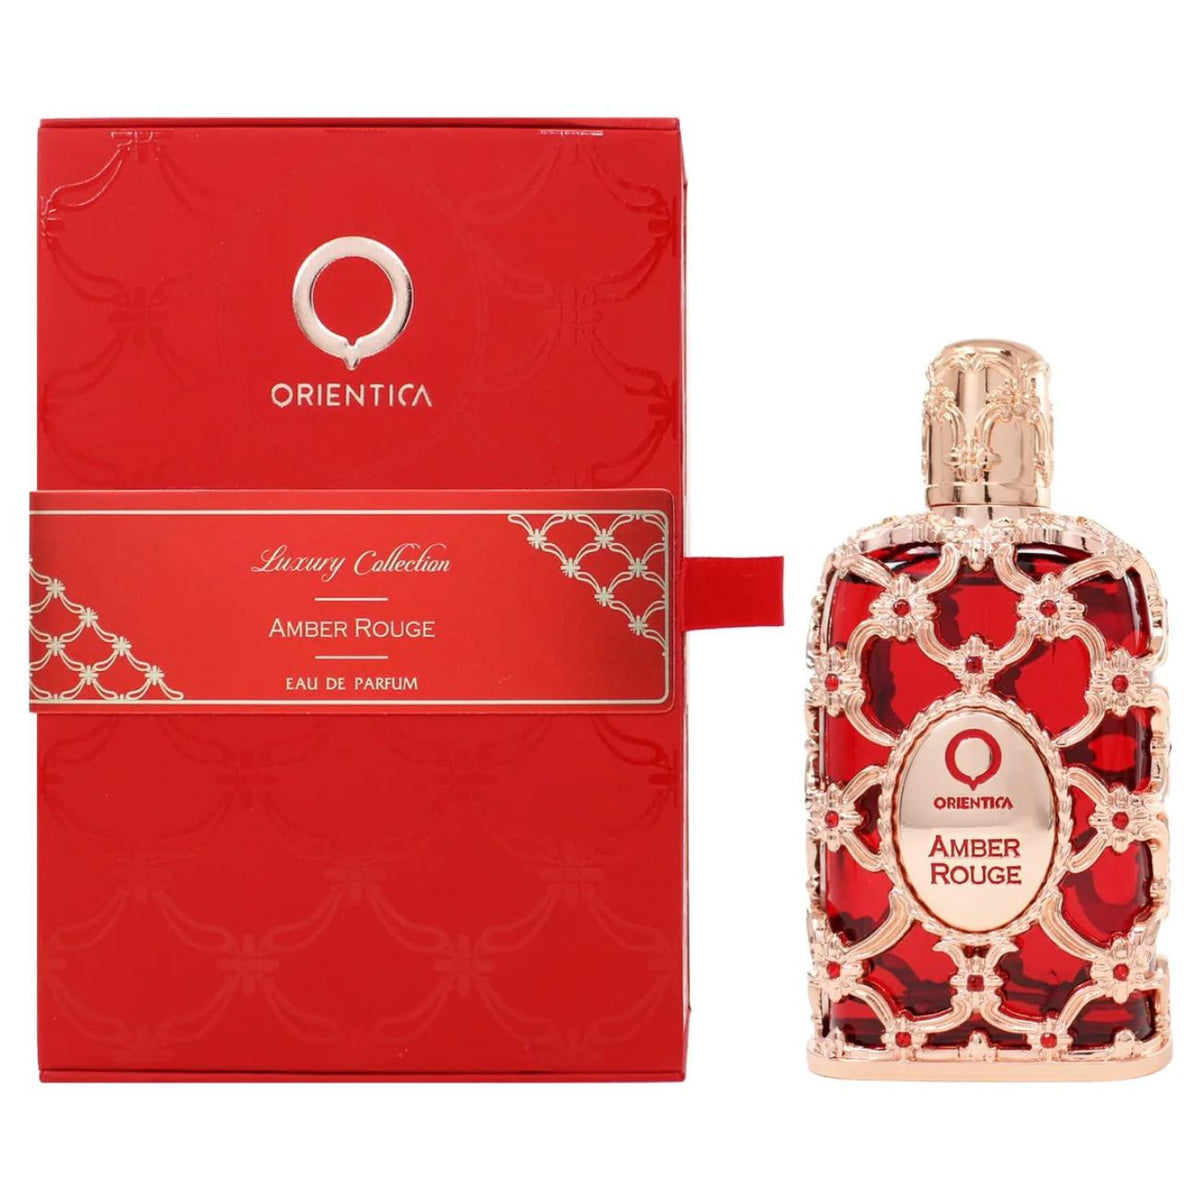 Perfume unisex Orientica Amber Rouge Eau de Parfum 150ml